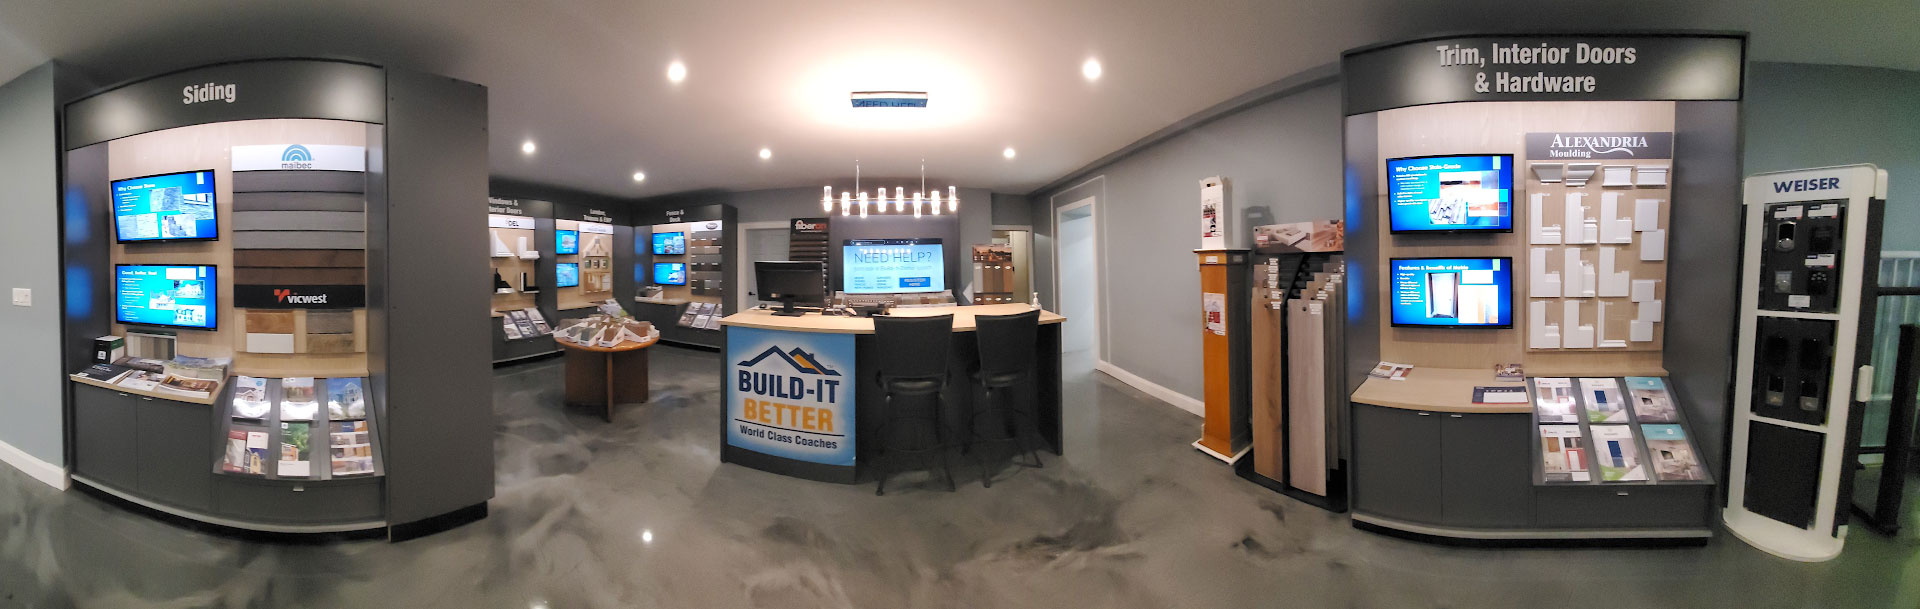 Build-it-Better Design Centre Showroom